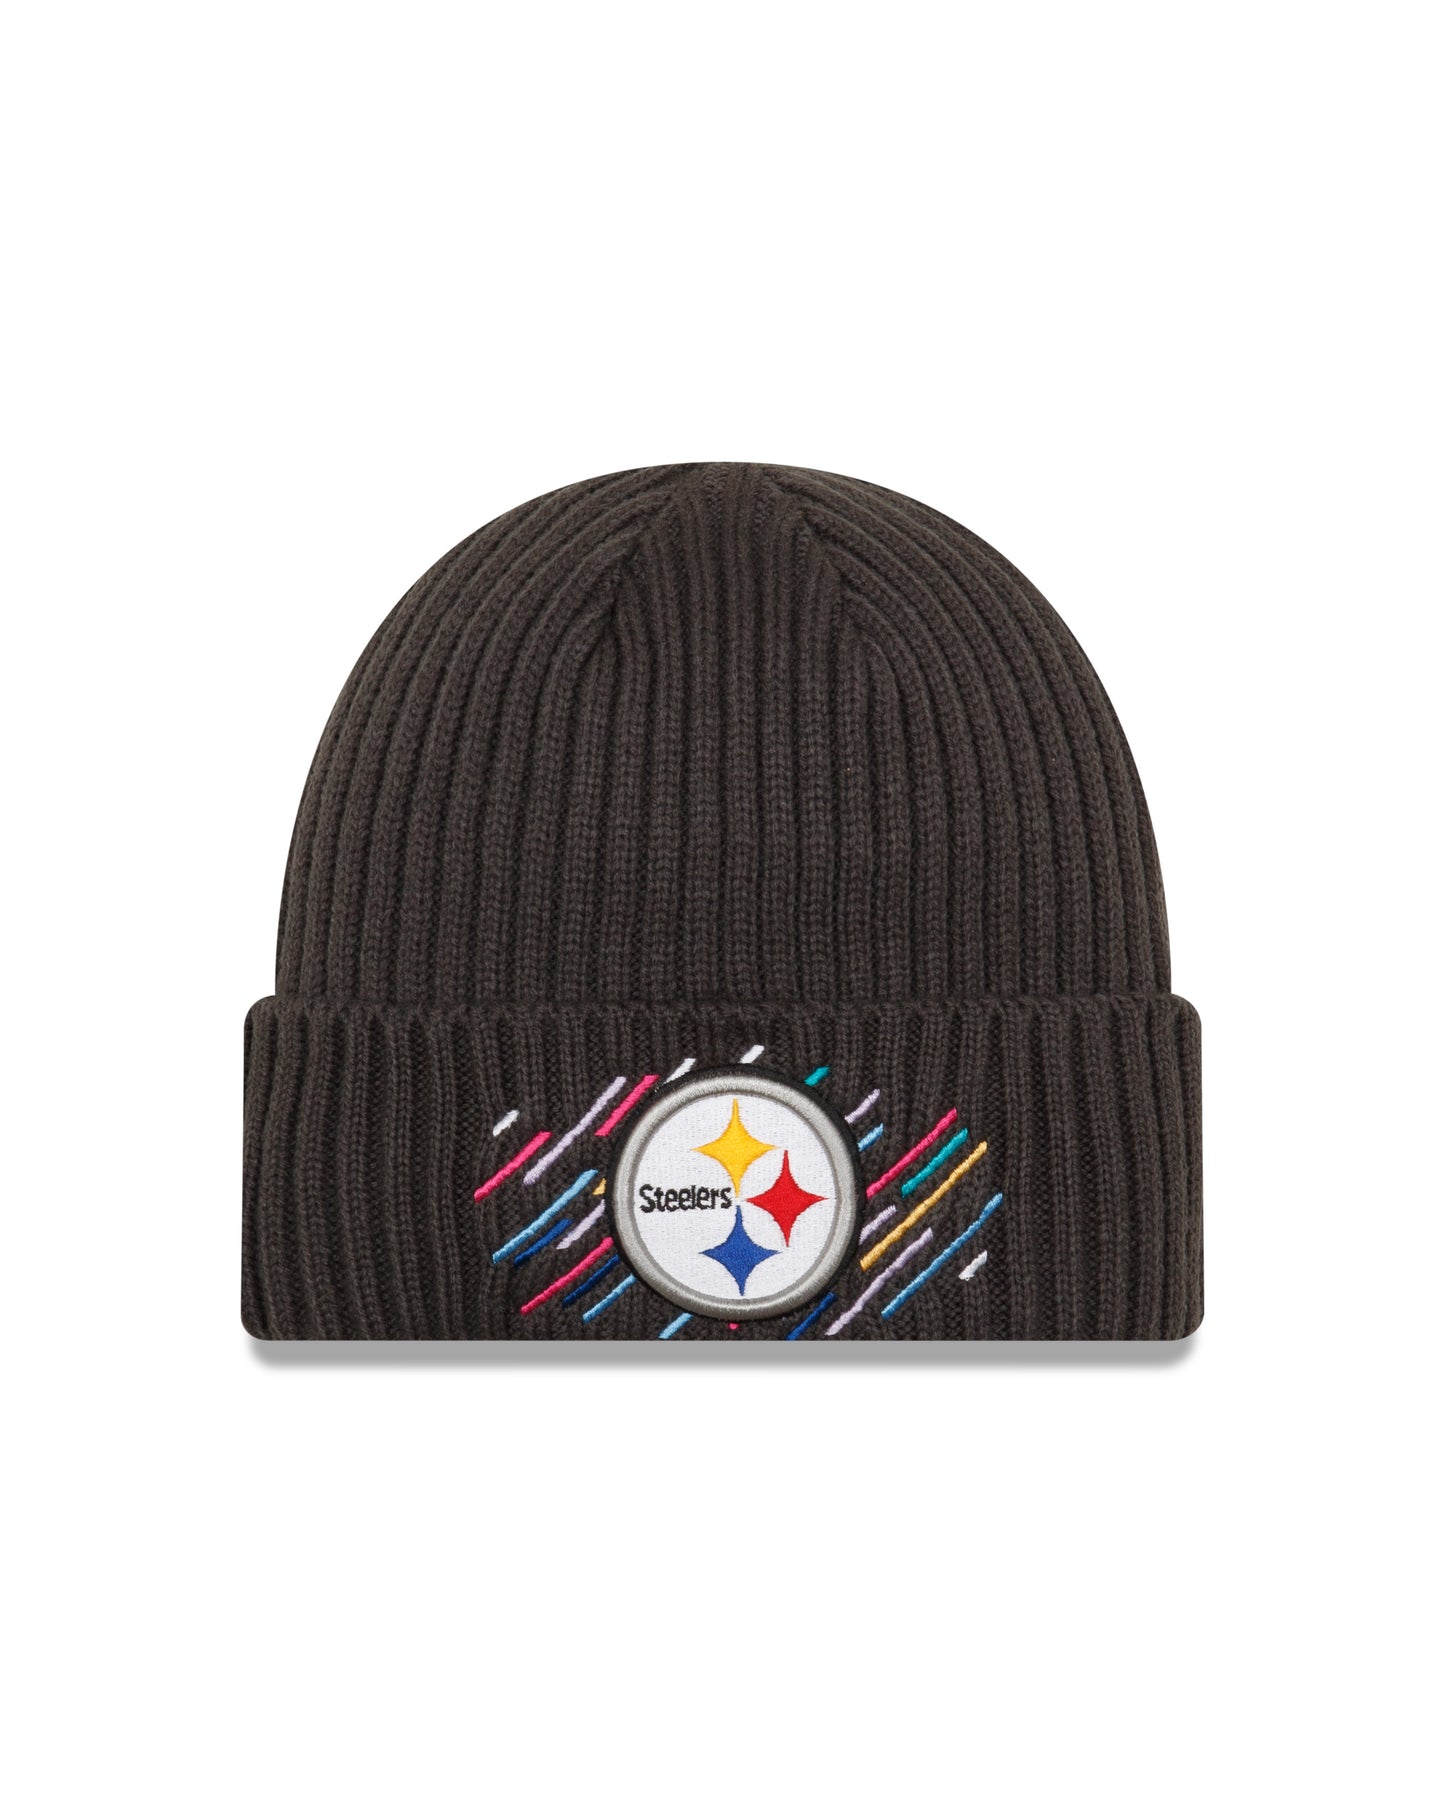 Pittsburgh Steelers New Era Crucial Catch Cuffed Knit Hat - Gray